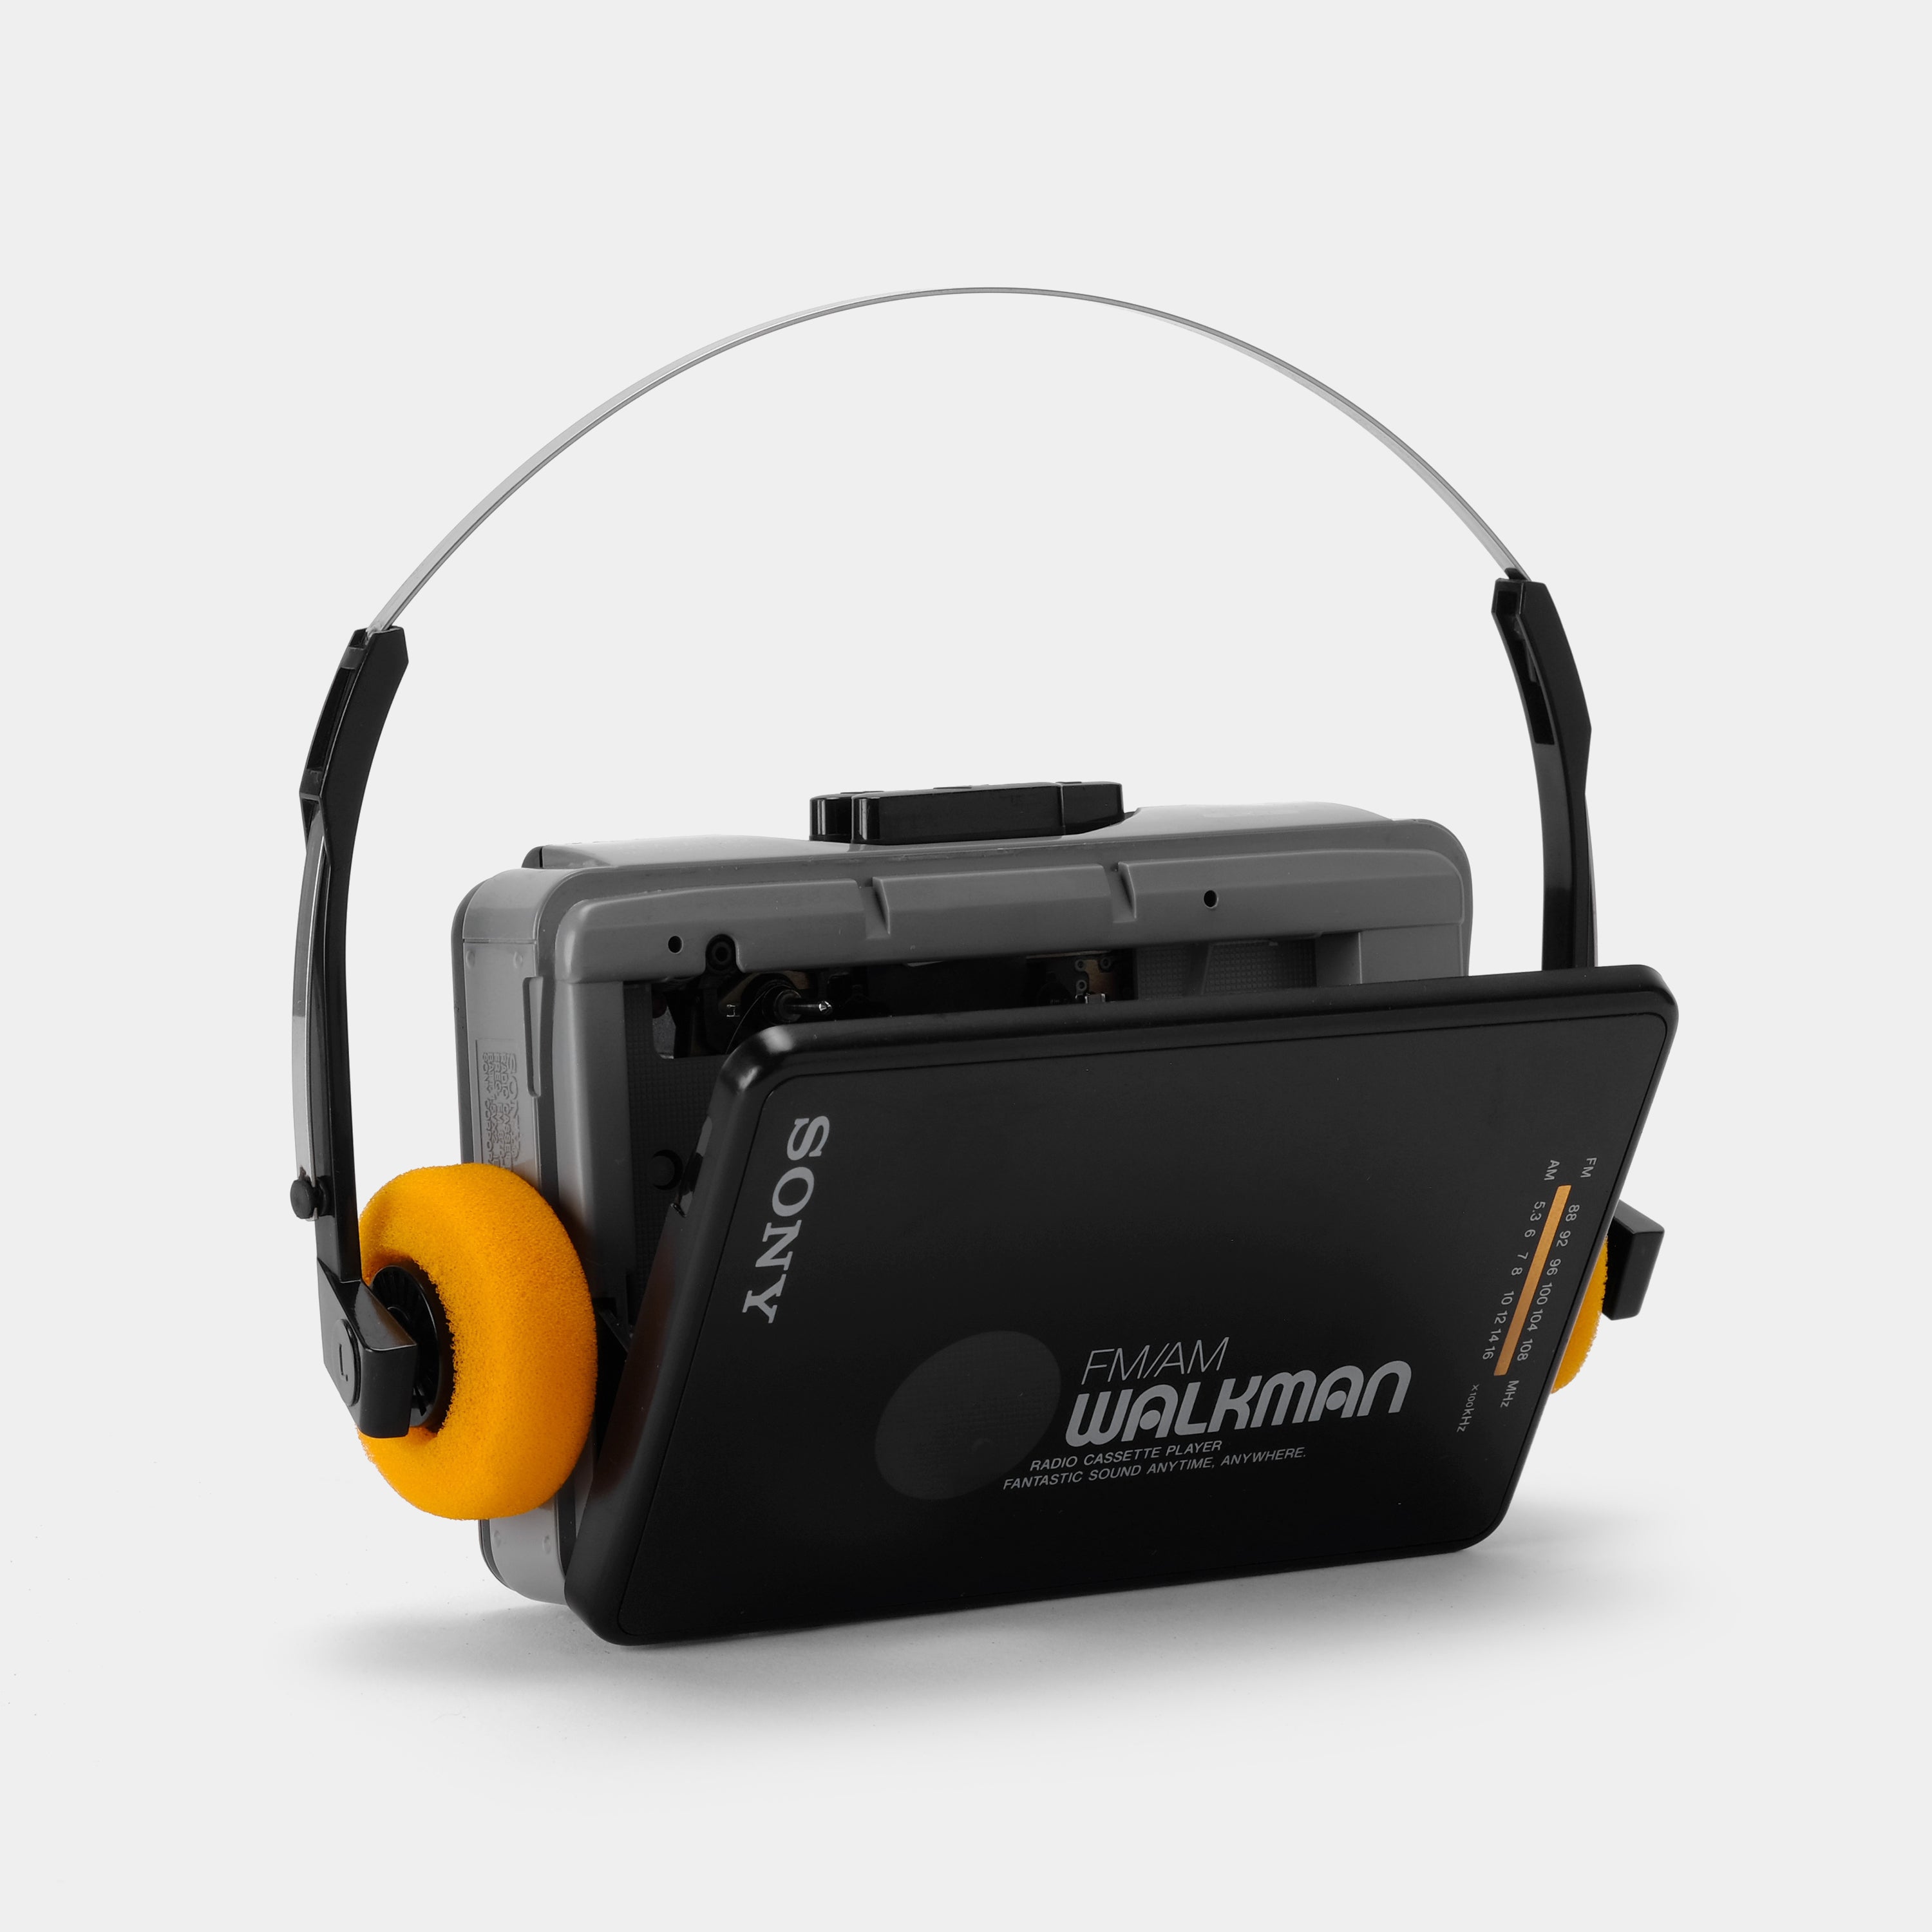 Sony Walkman WM-FX10 AM/FM Portable Cassette Player Refurbished by